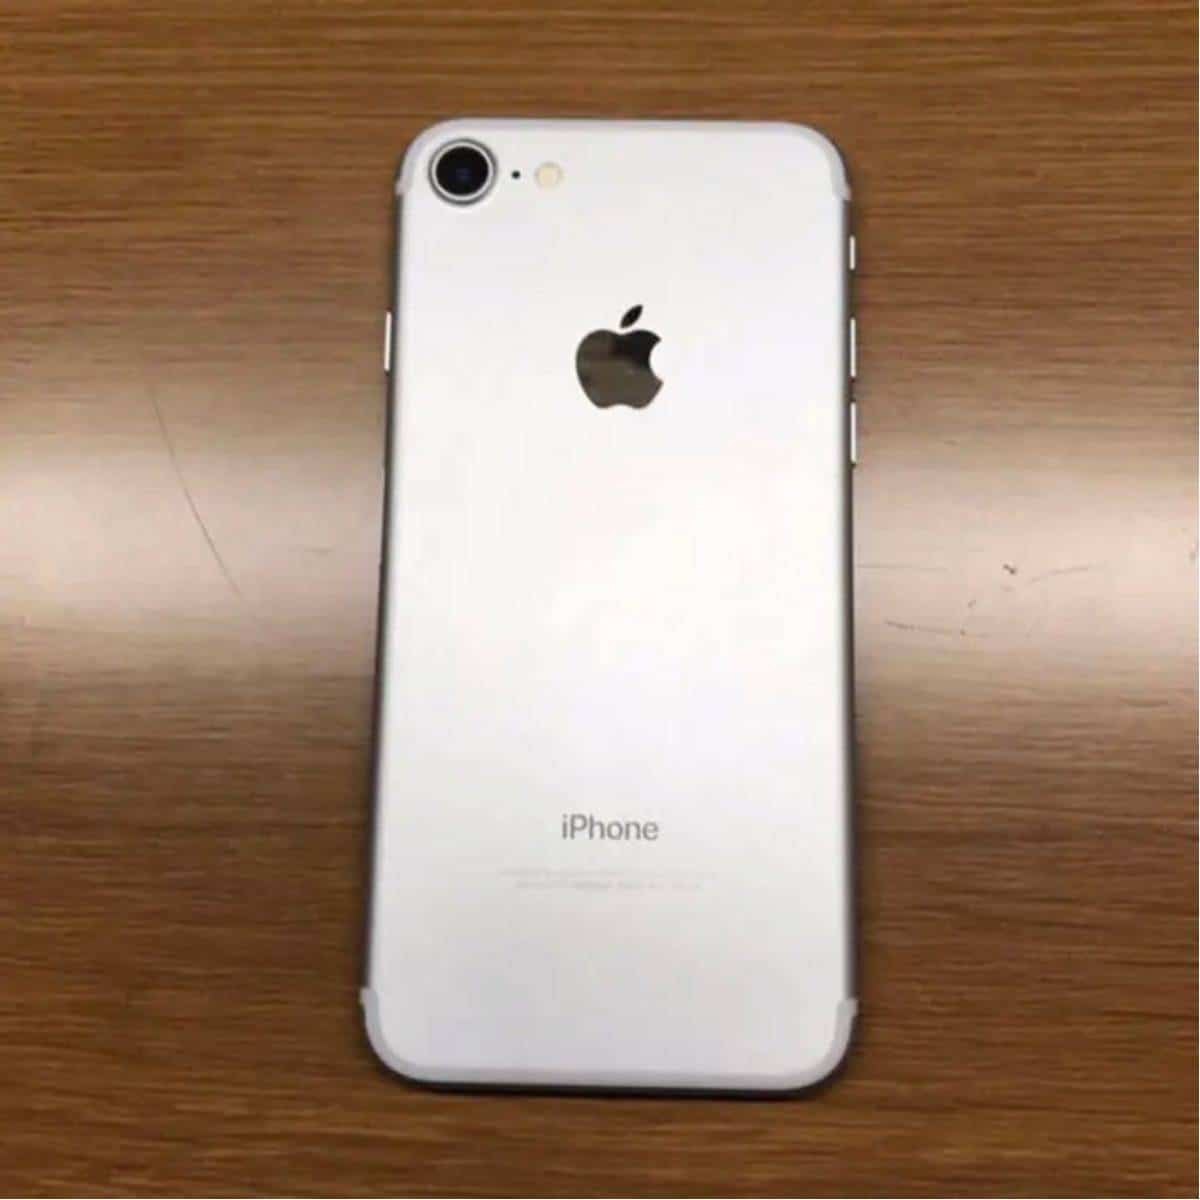 [Used]iPhone7 128GB silver SIM-free